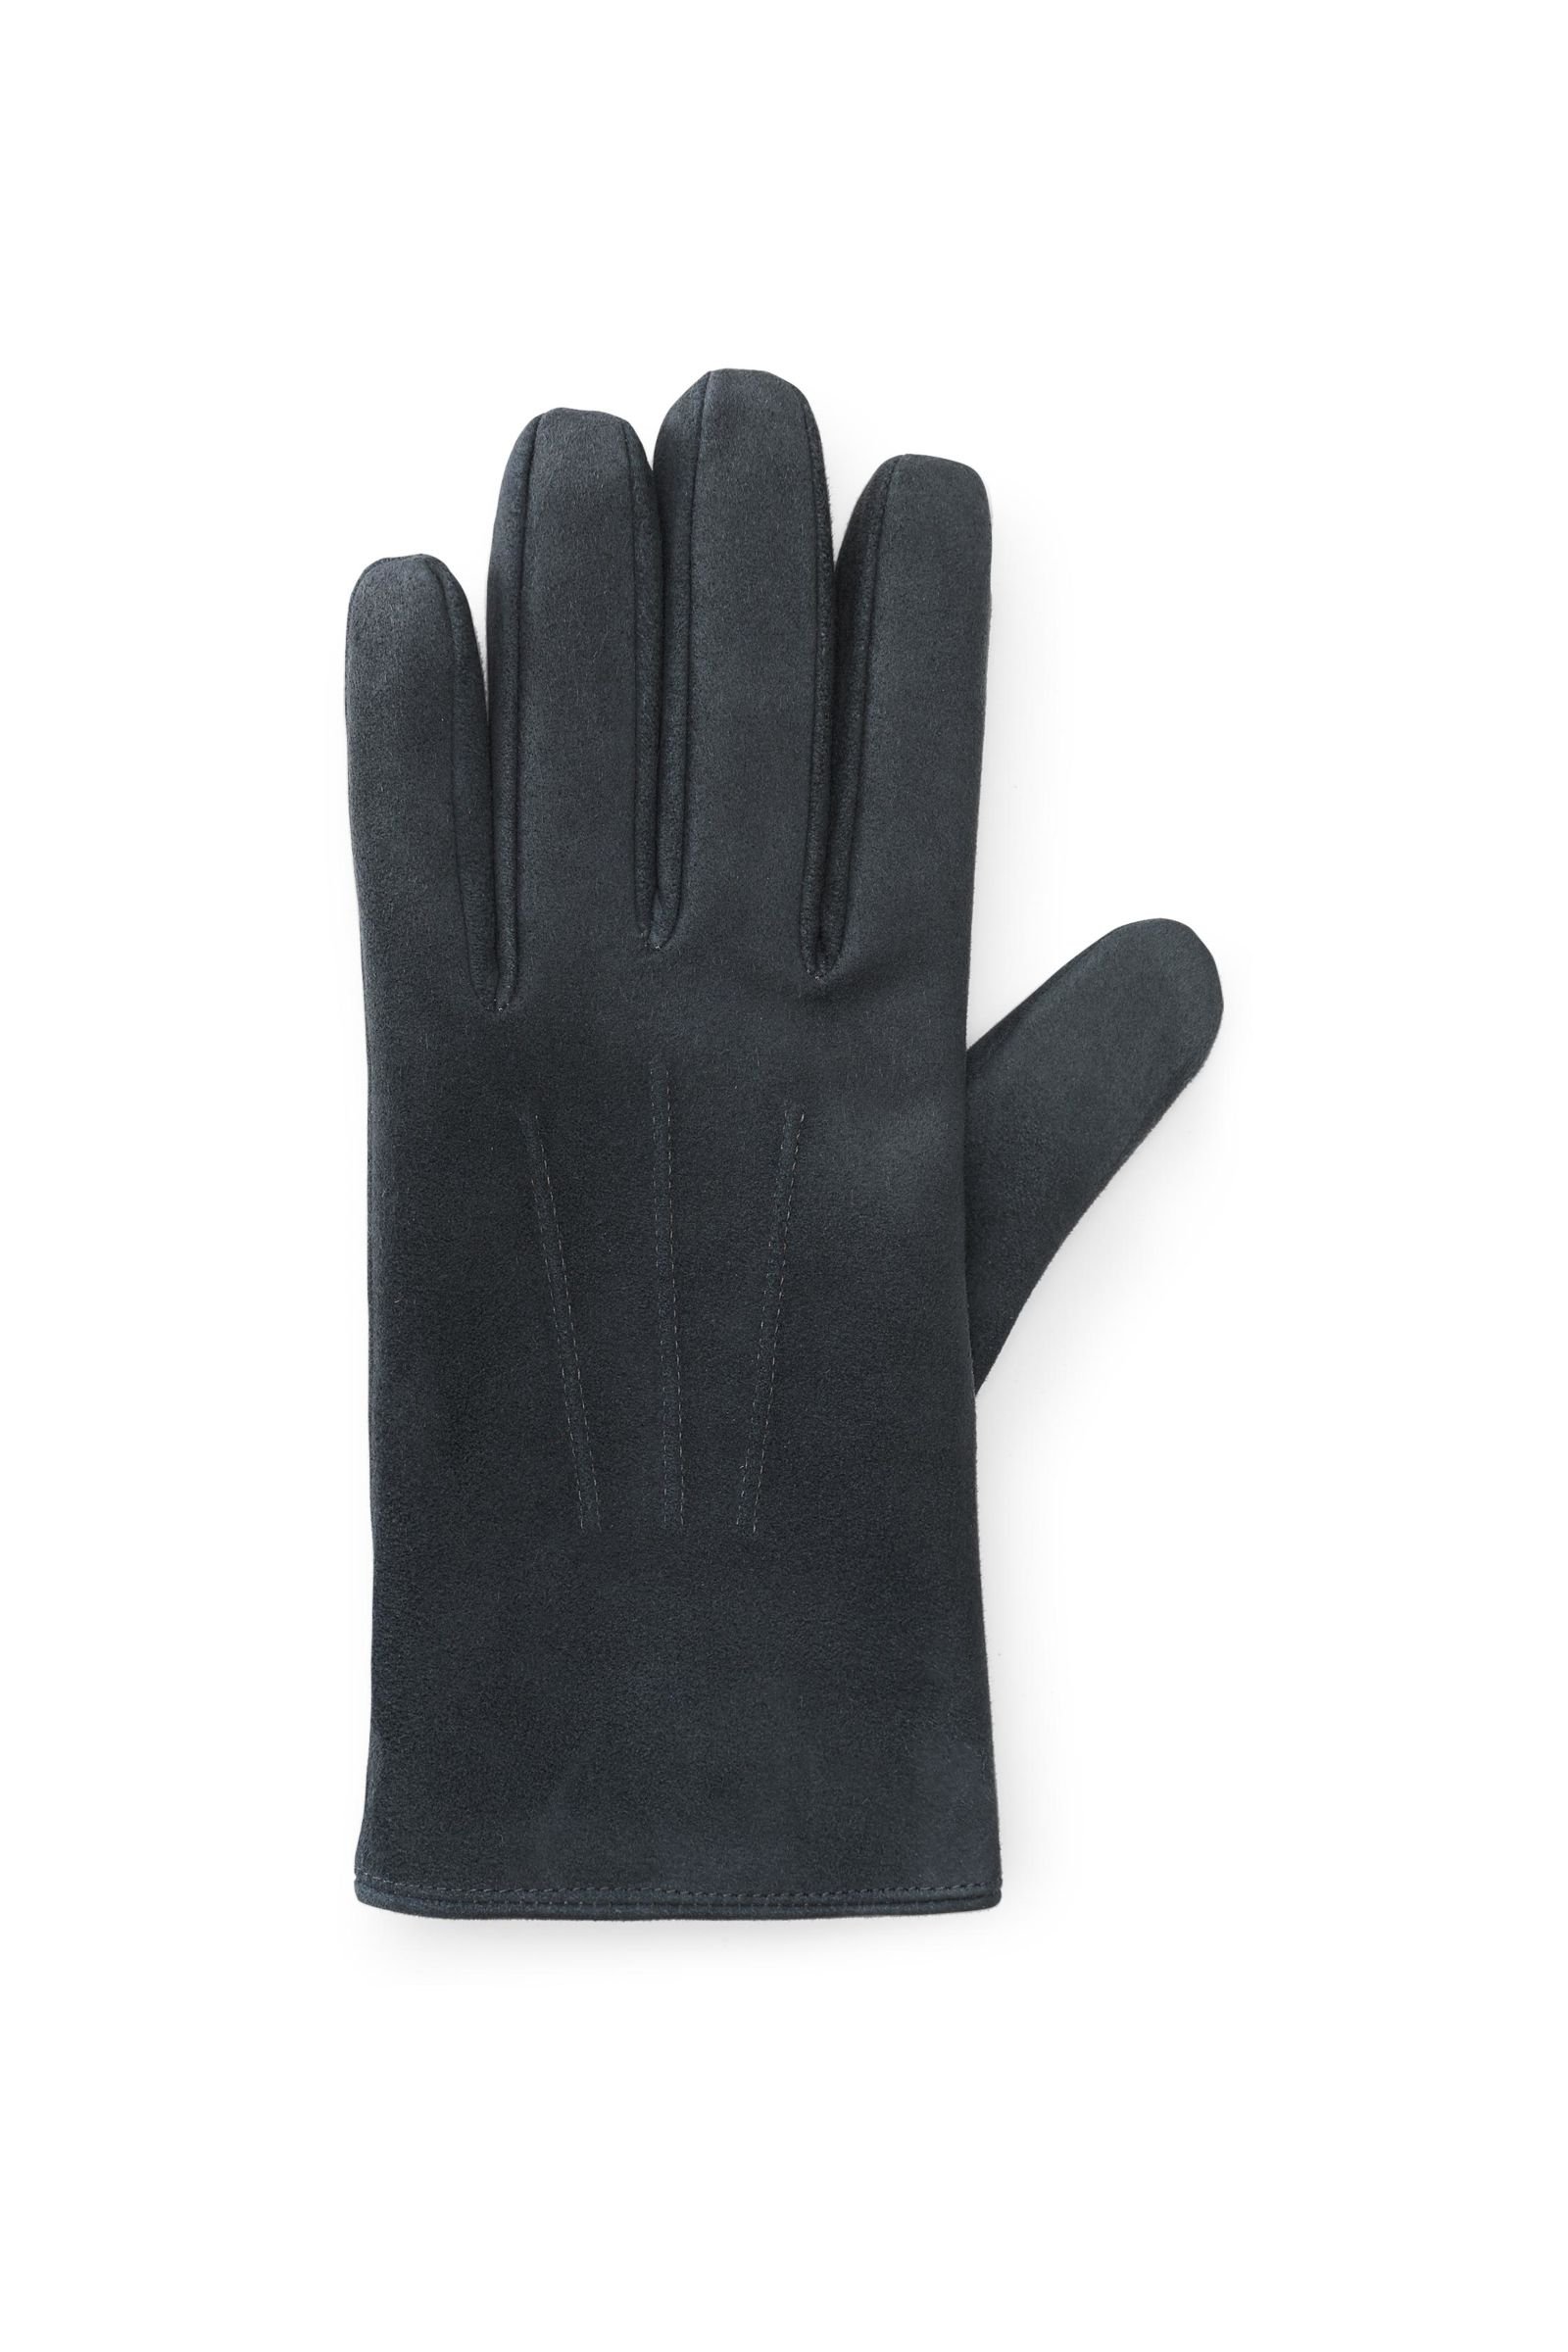 Gloves suede anthracite